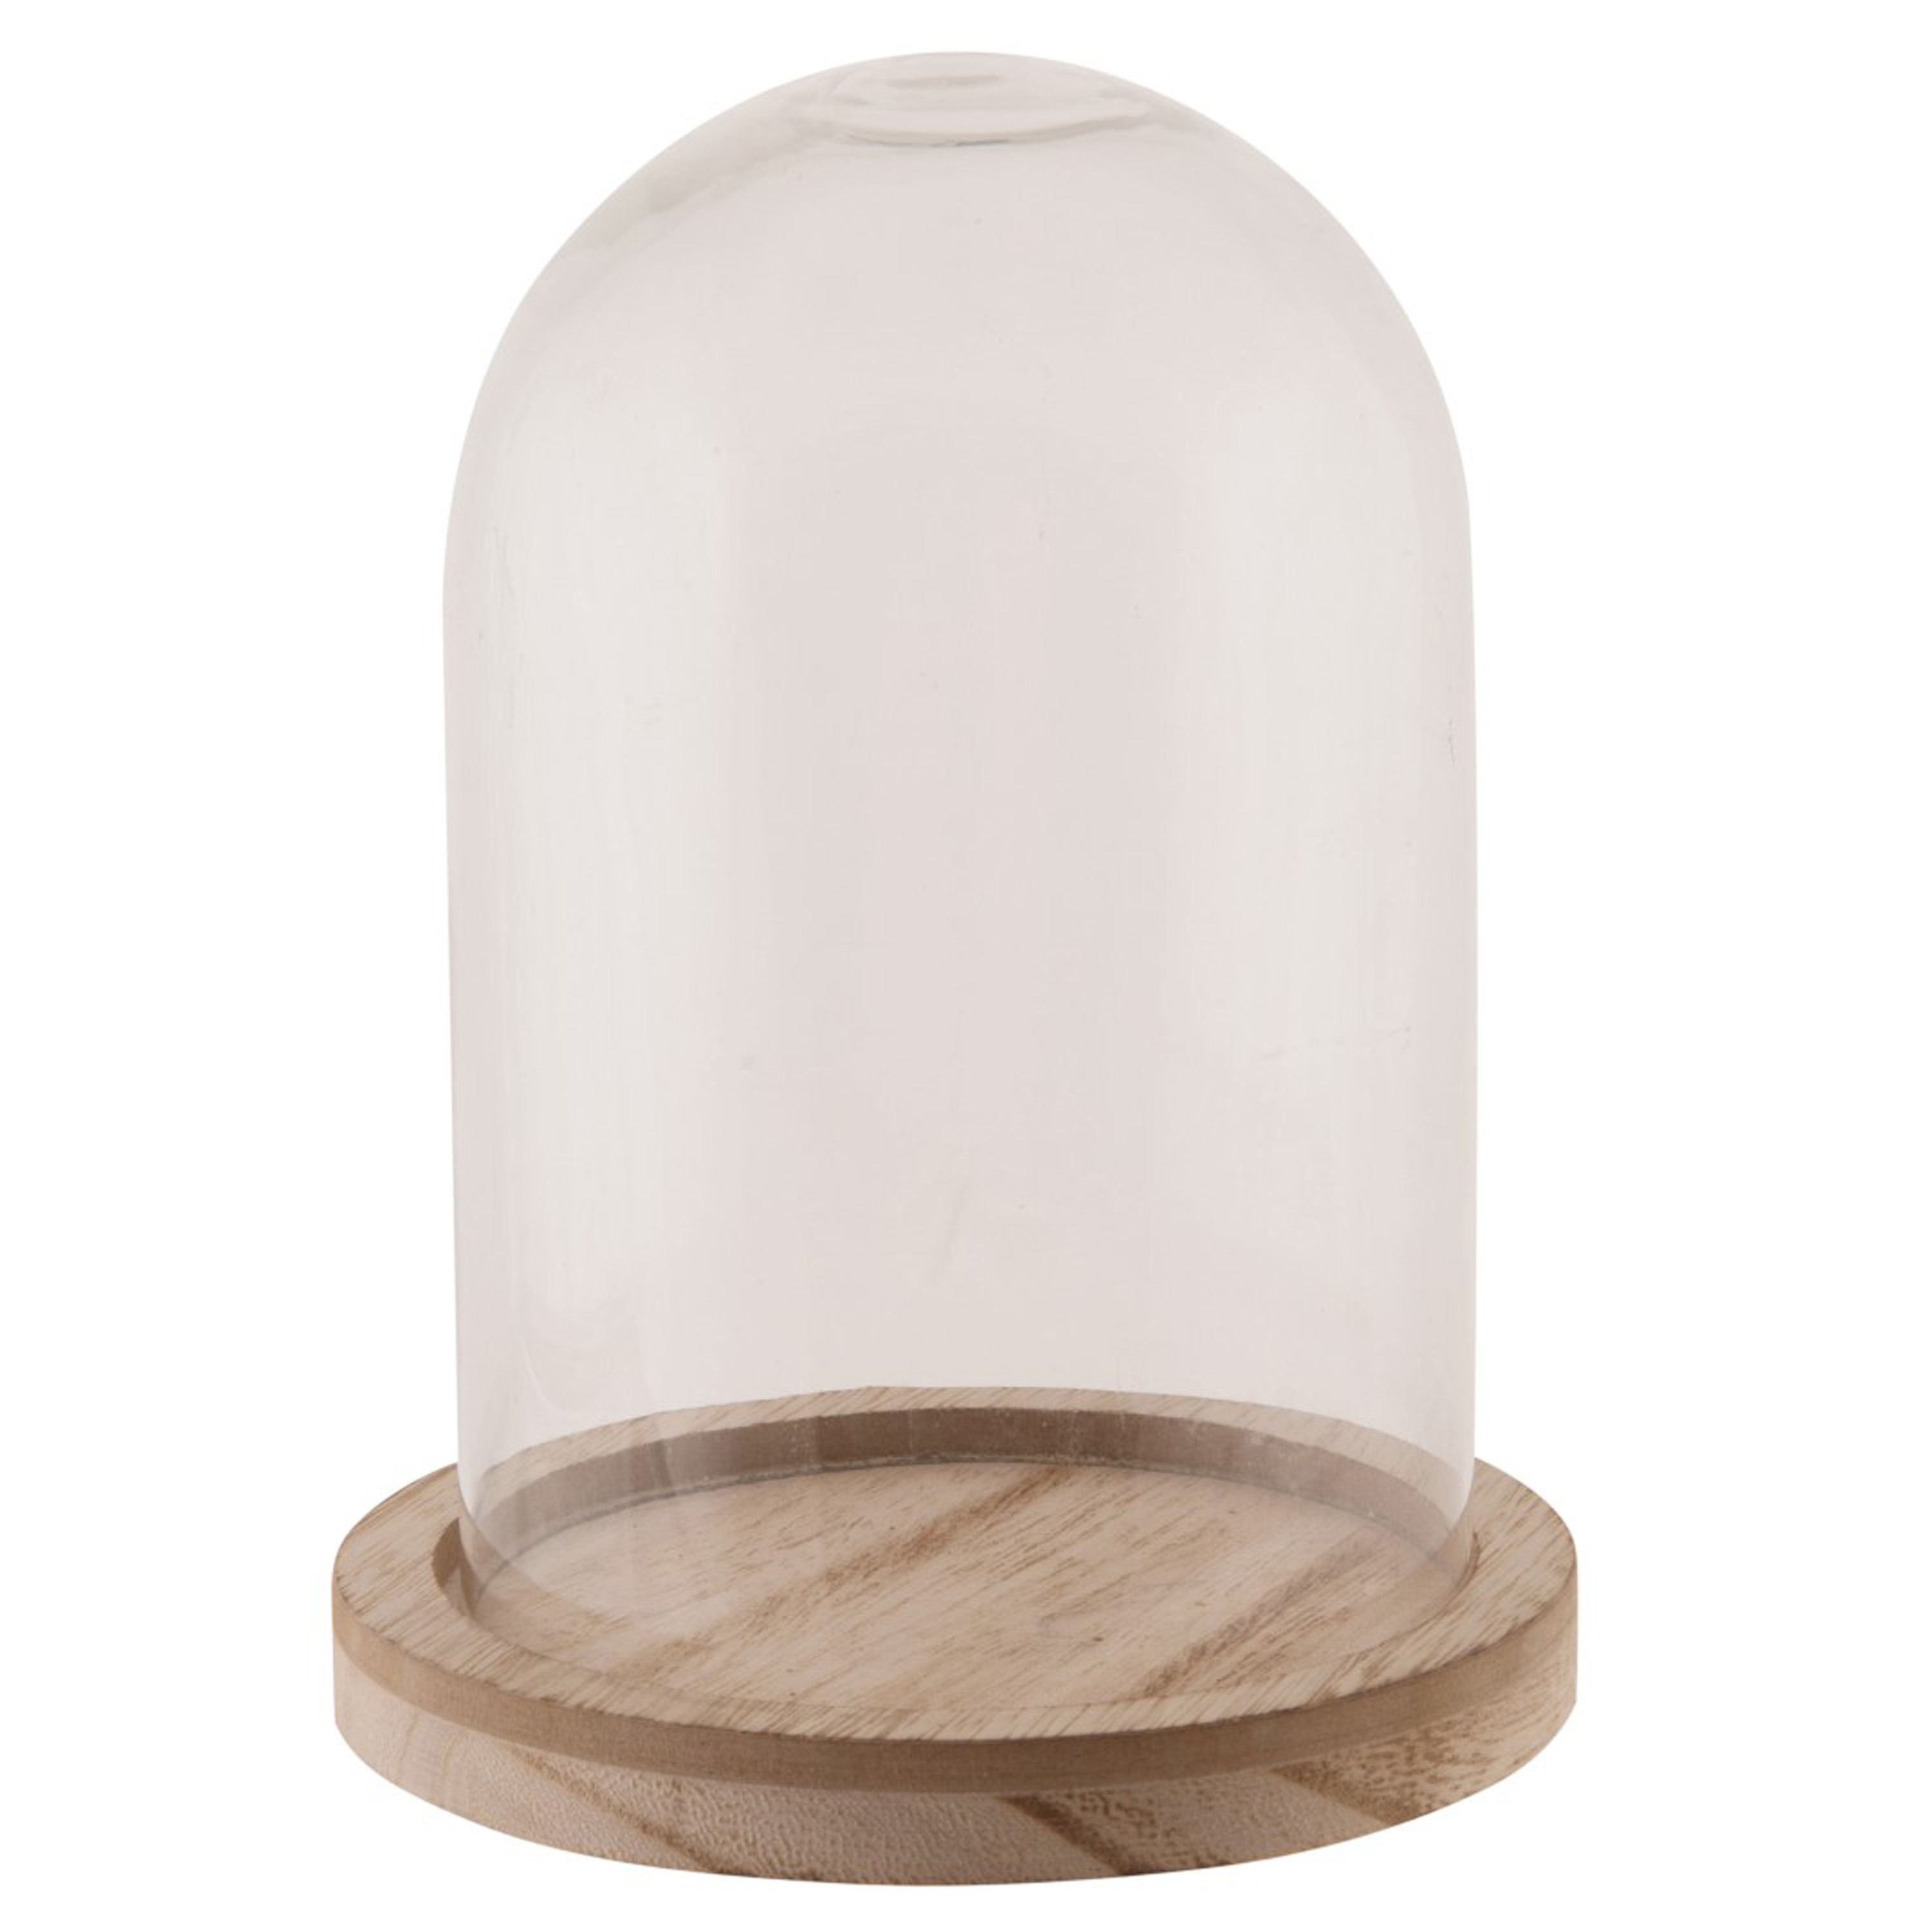 Dijk Natural Collections stolp - glas - houten bruin plateau - D12 x H13 cm -